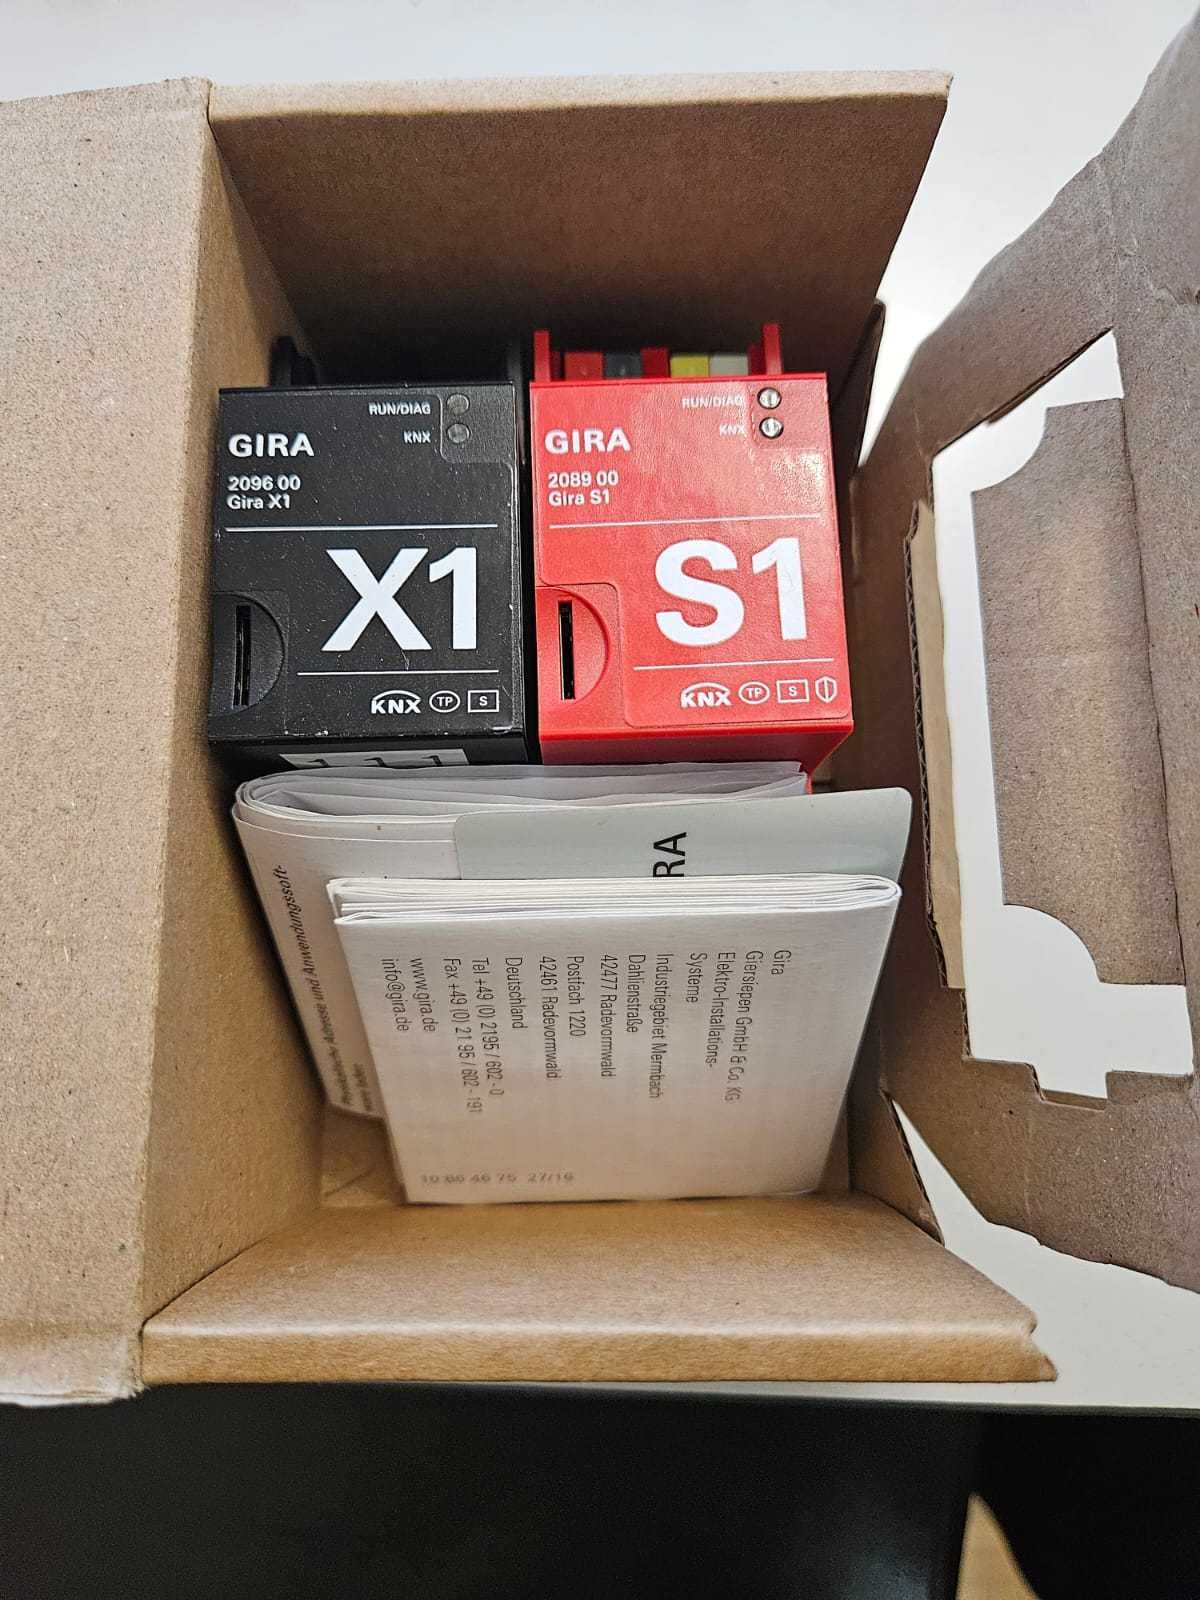 Server KNX Gira X1 + Gira S1 smart Home